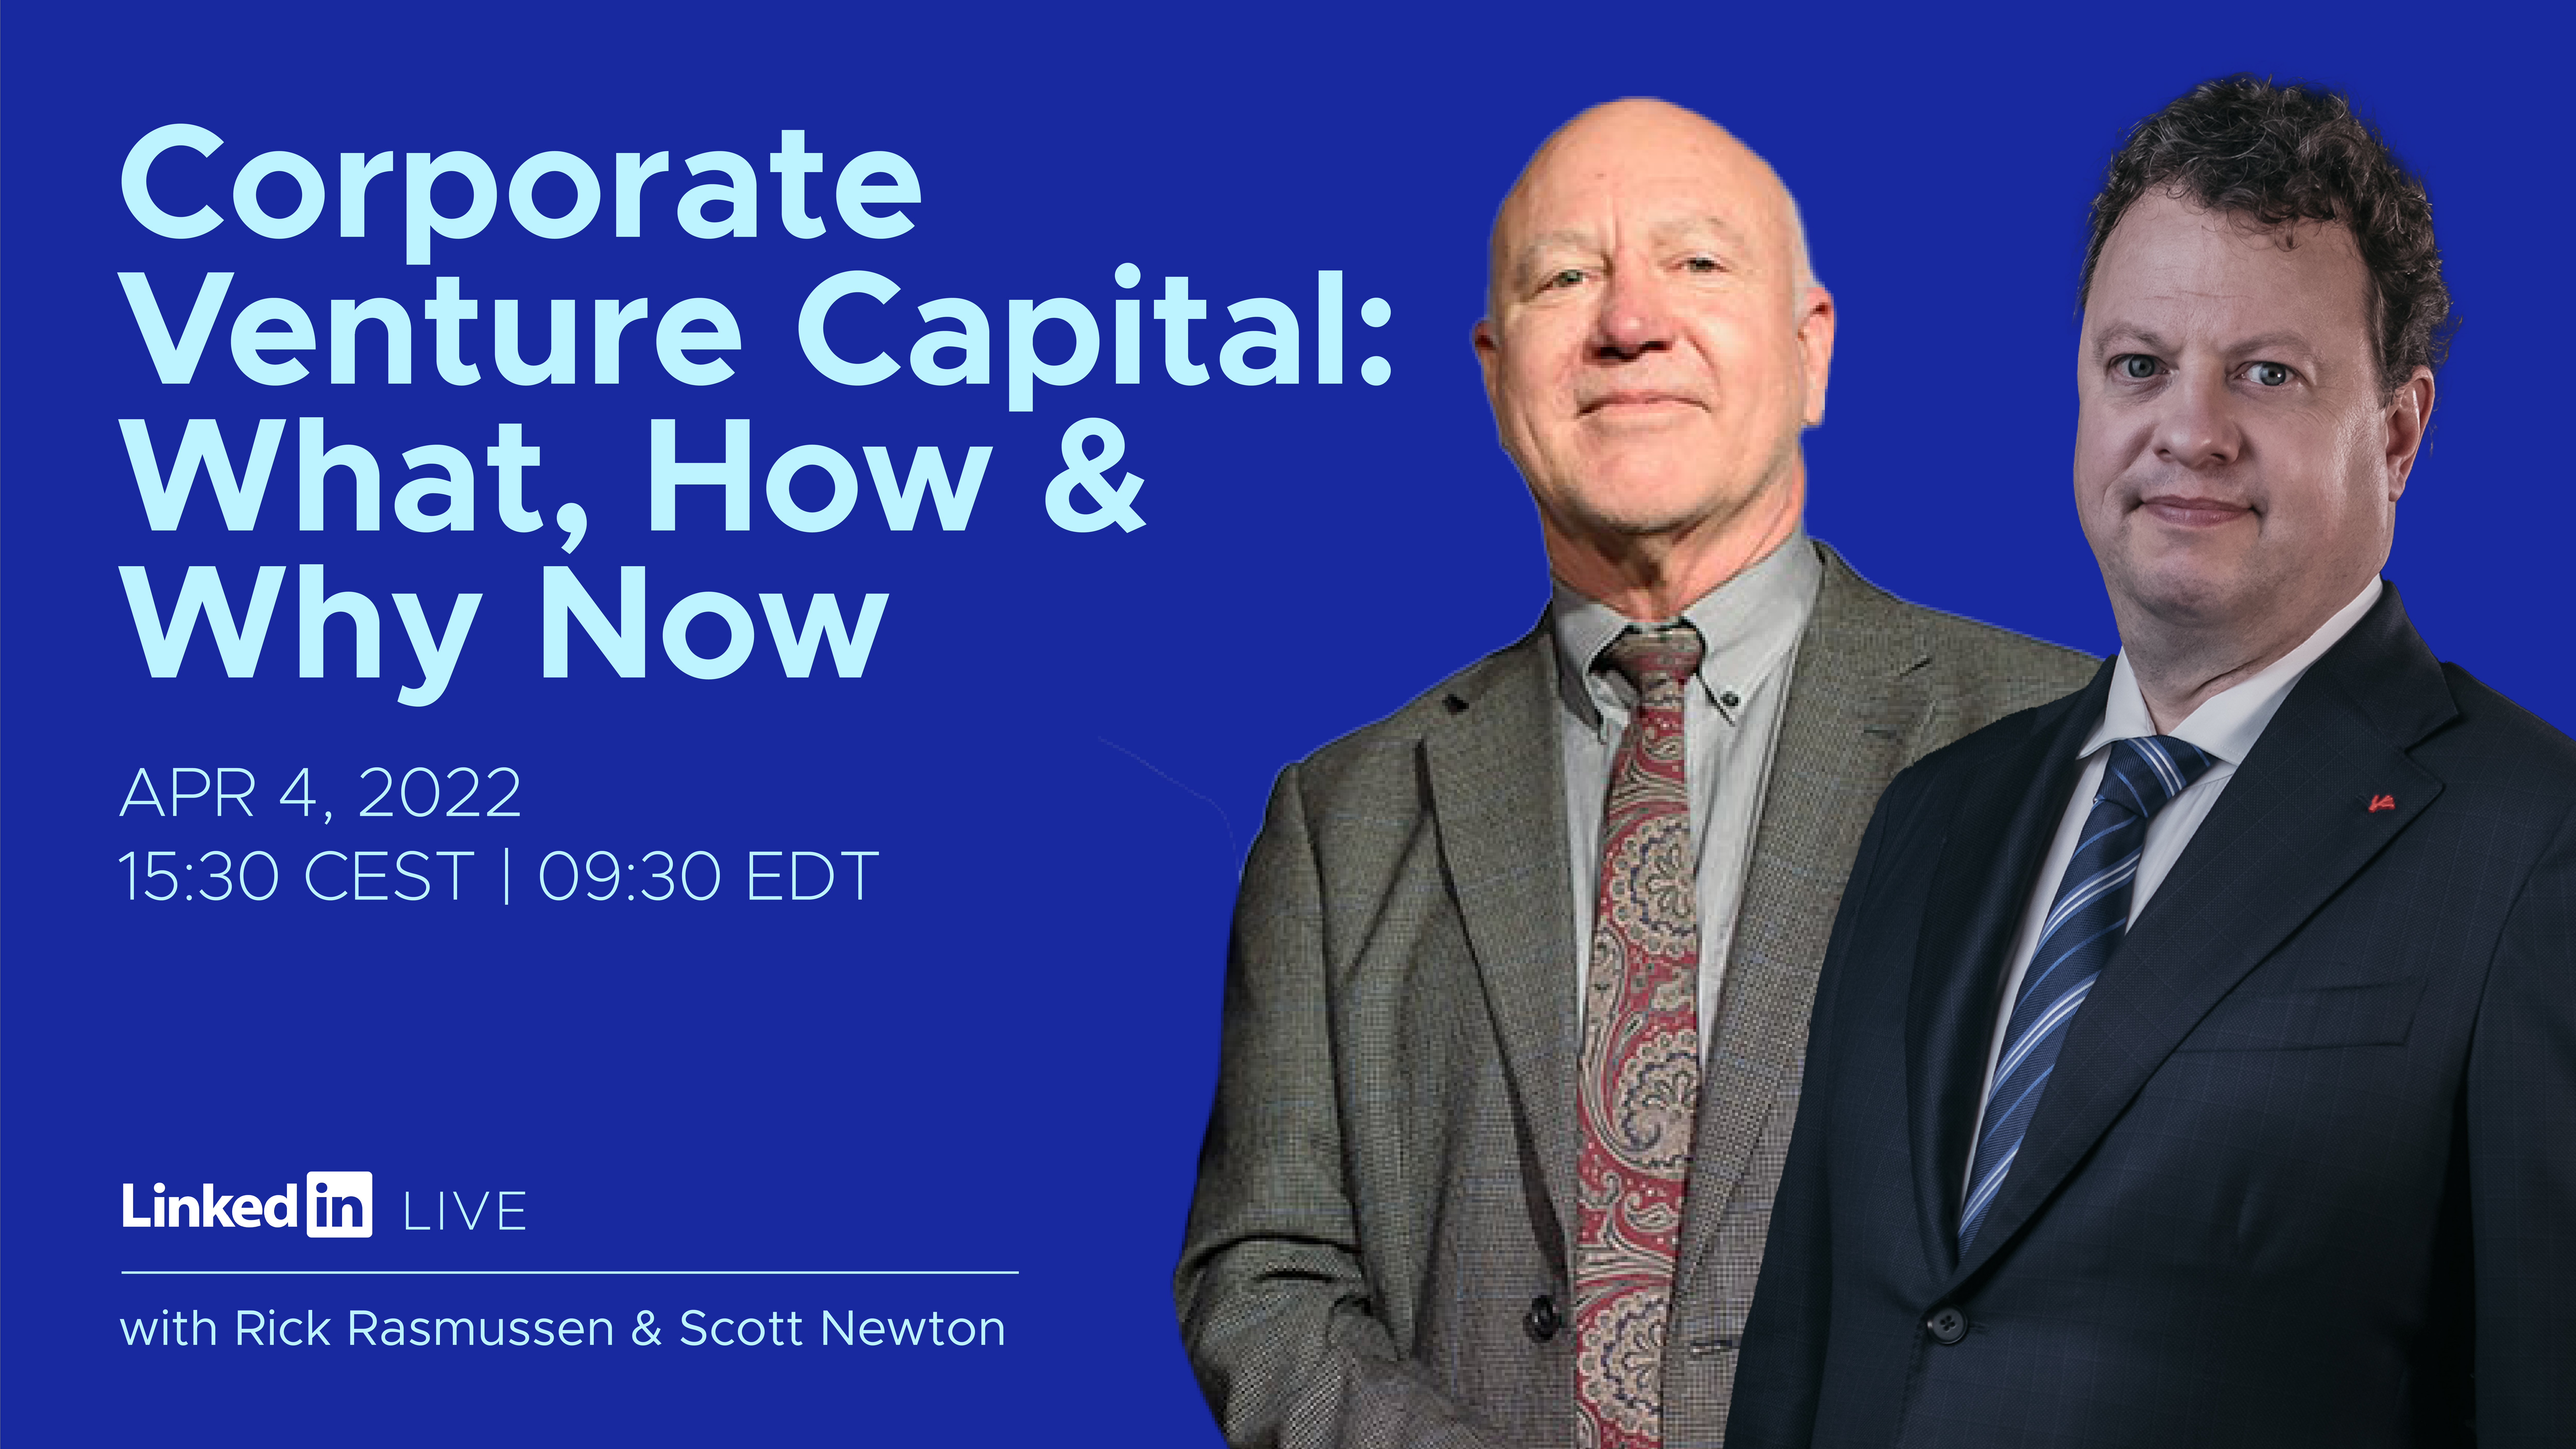 Photo of Managing Partner Scott Newton and Industry Expert Rick Rasmussen speaking jointly on Corporate Venture Capital